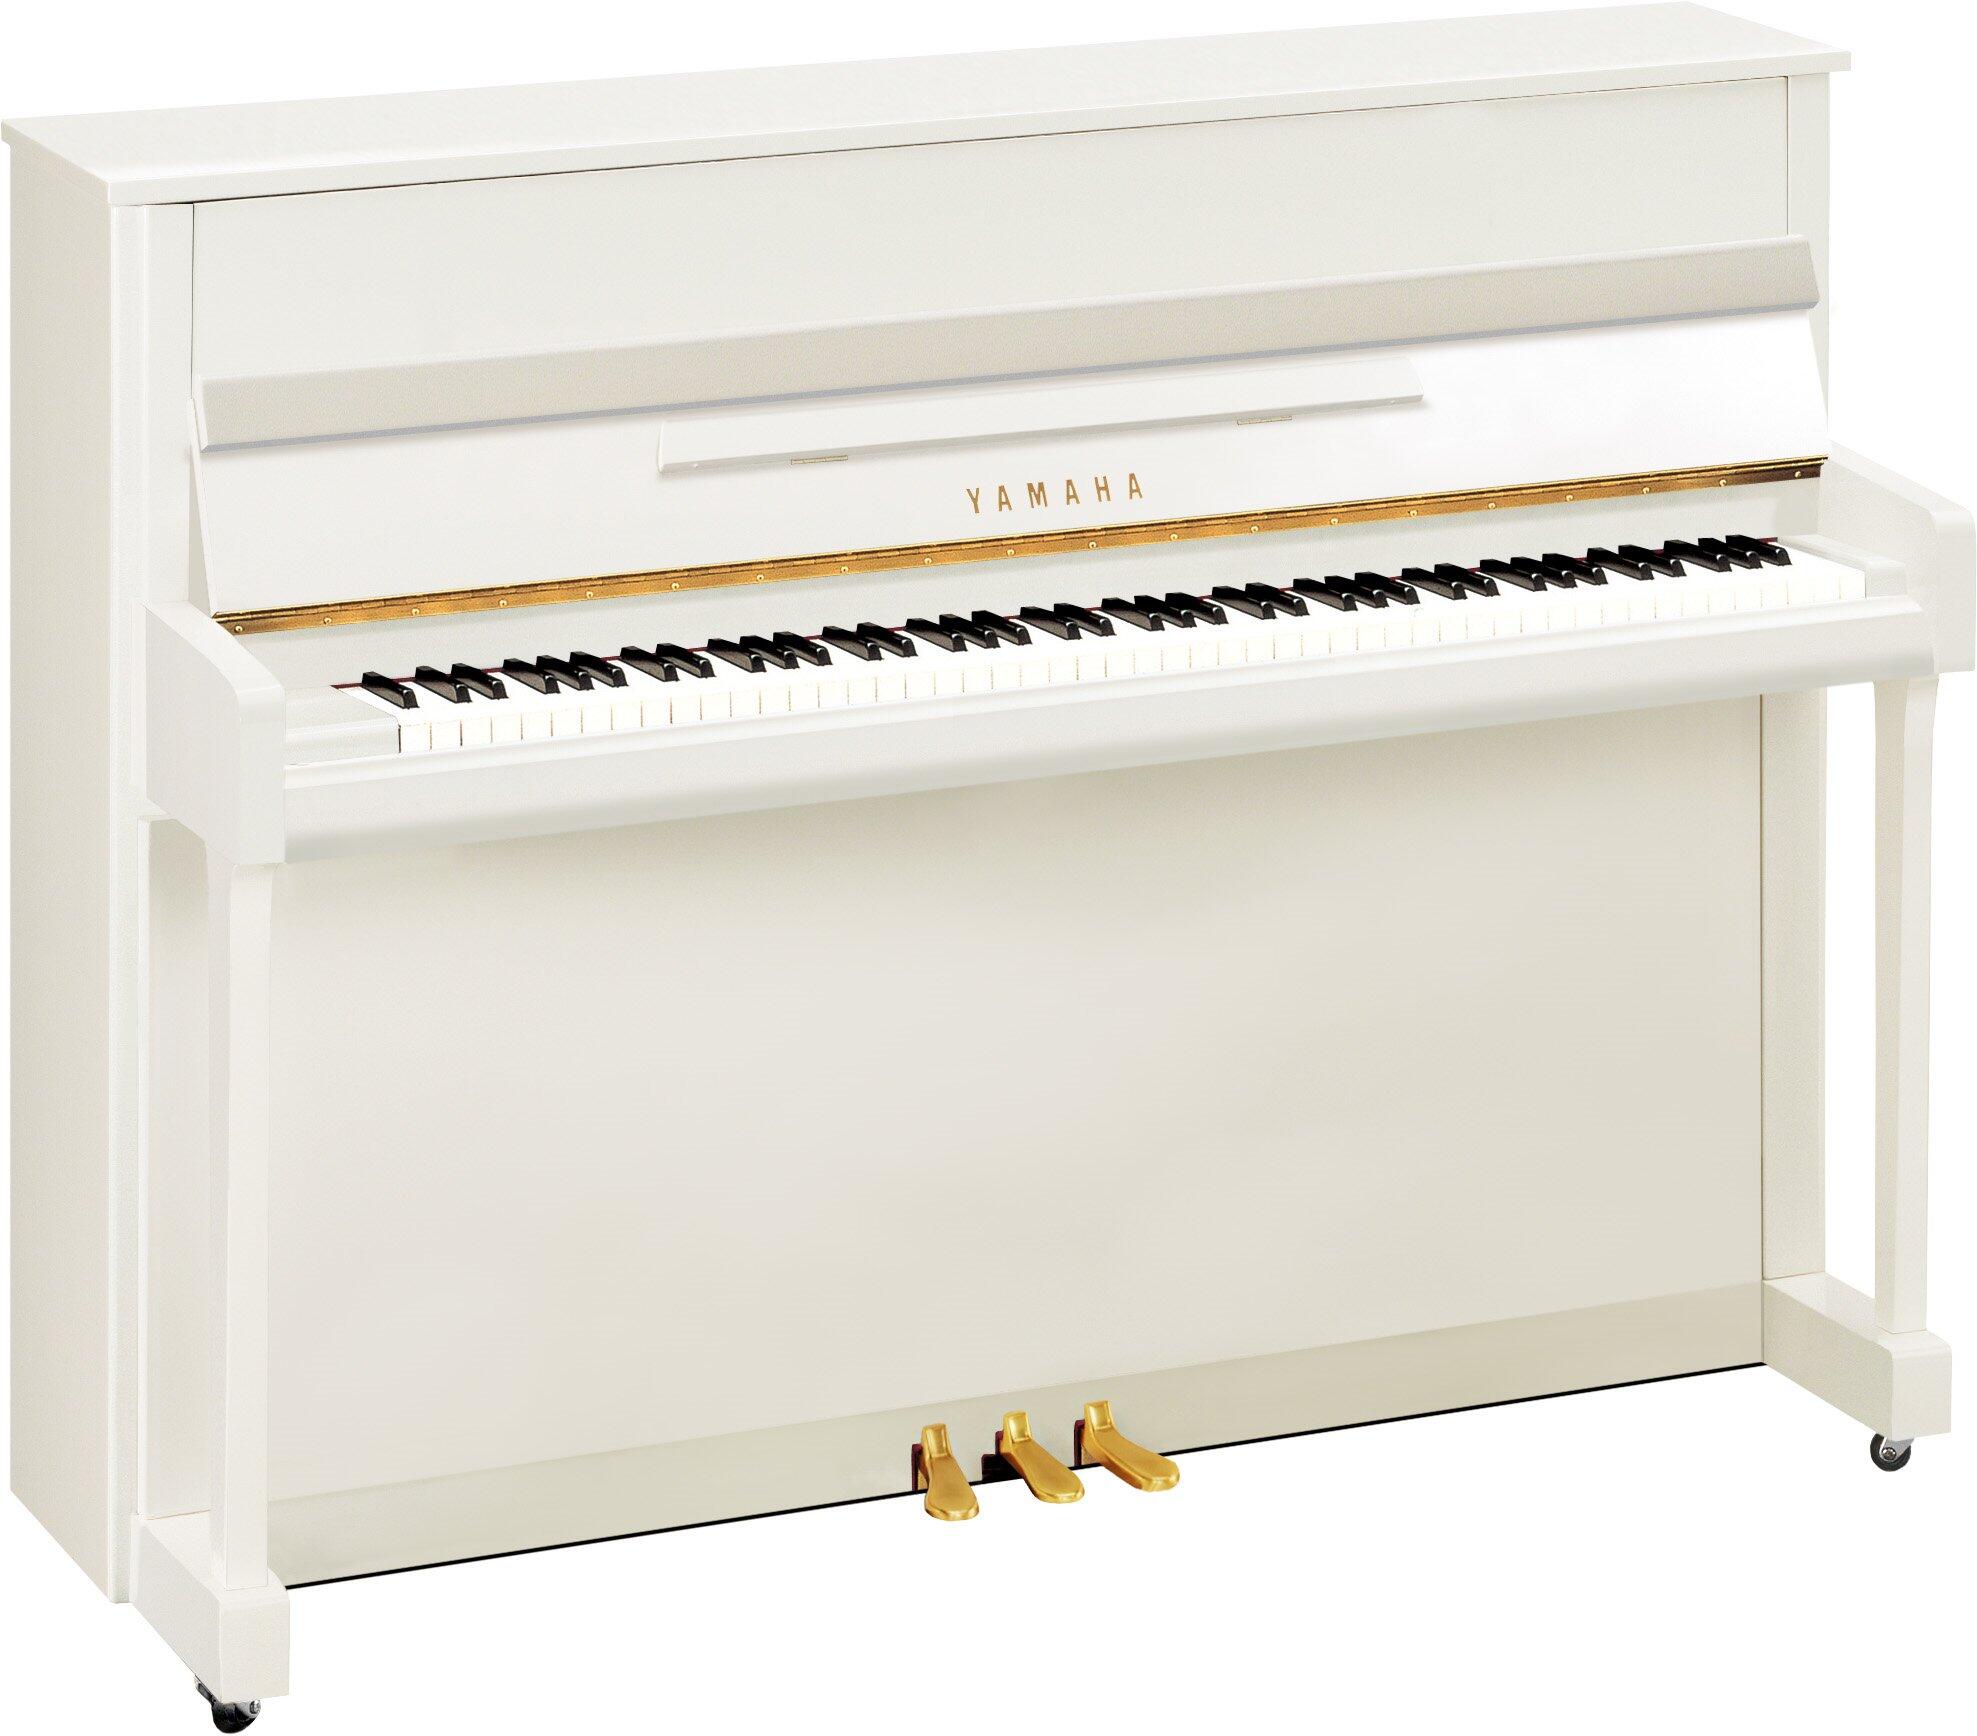 Yamaha Pianos Silent B2 SC3 PWH Silent Glossy White 113 cm : photo 1